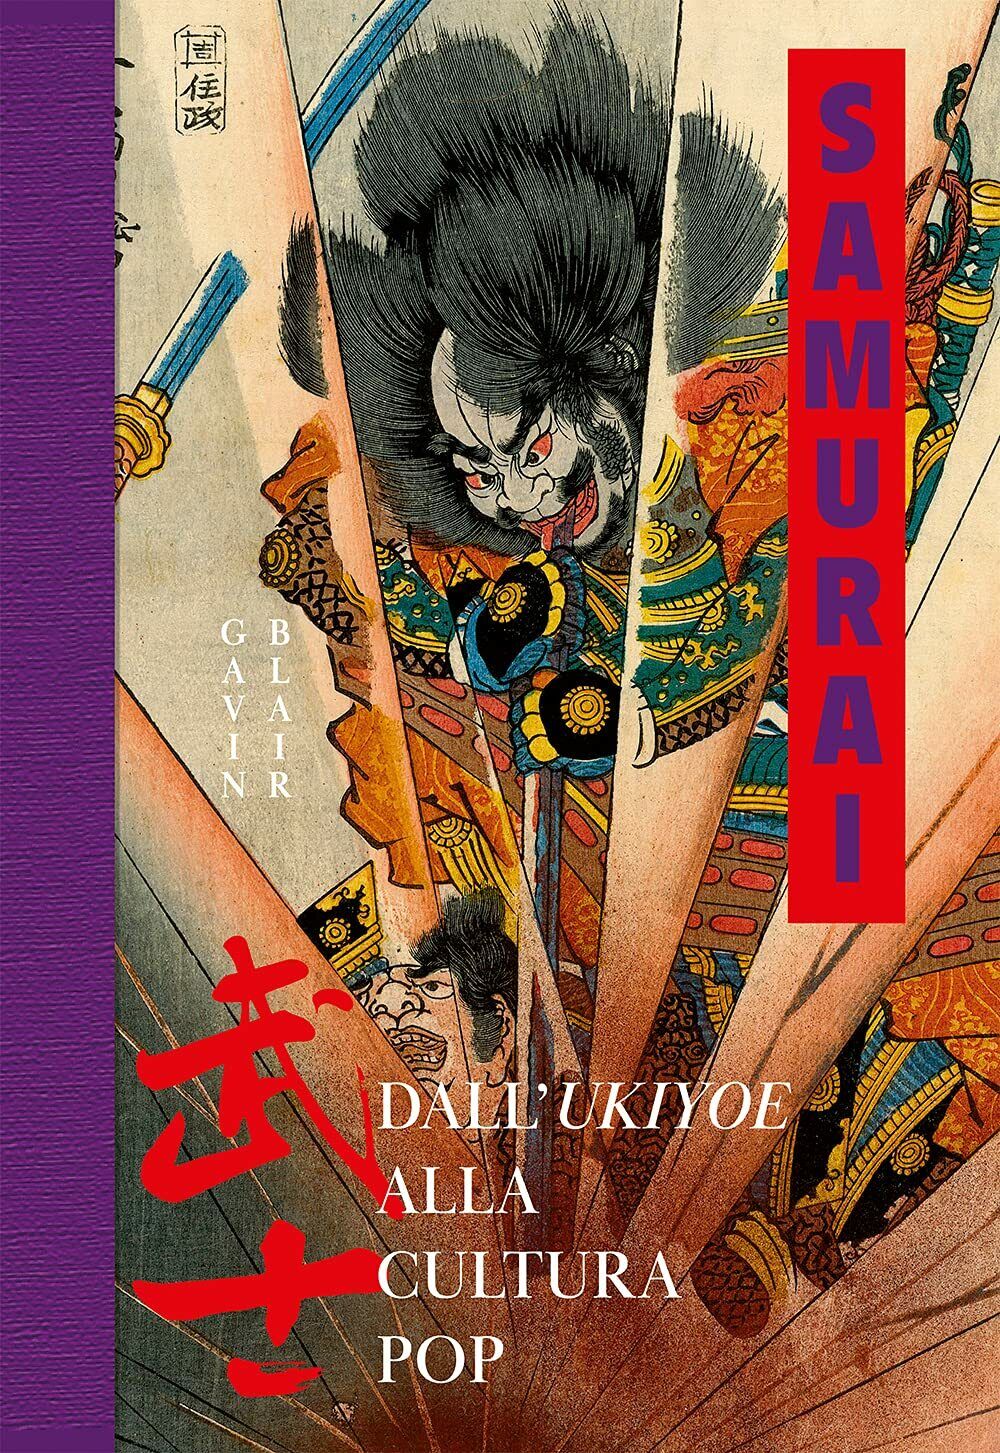 Samurai. Dall'Ukiyoe alla cultura pop - Gavin Blair - Nuinui, 2021 libro usato